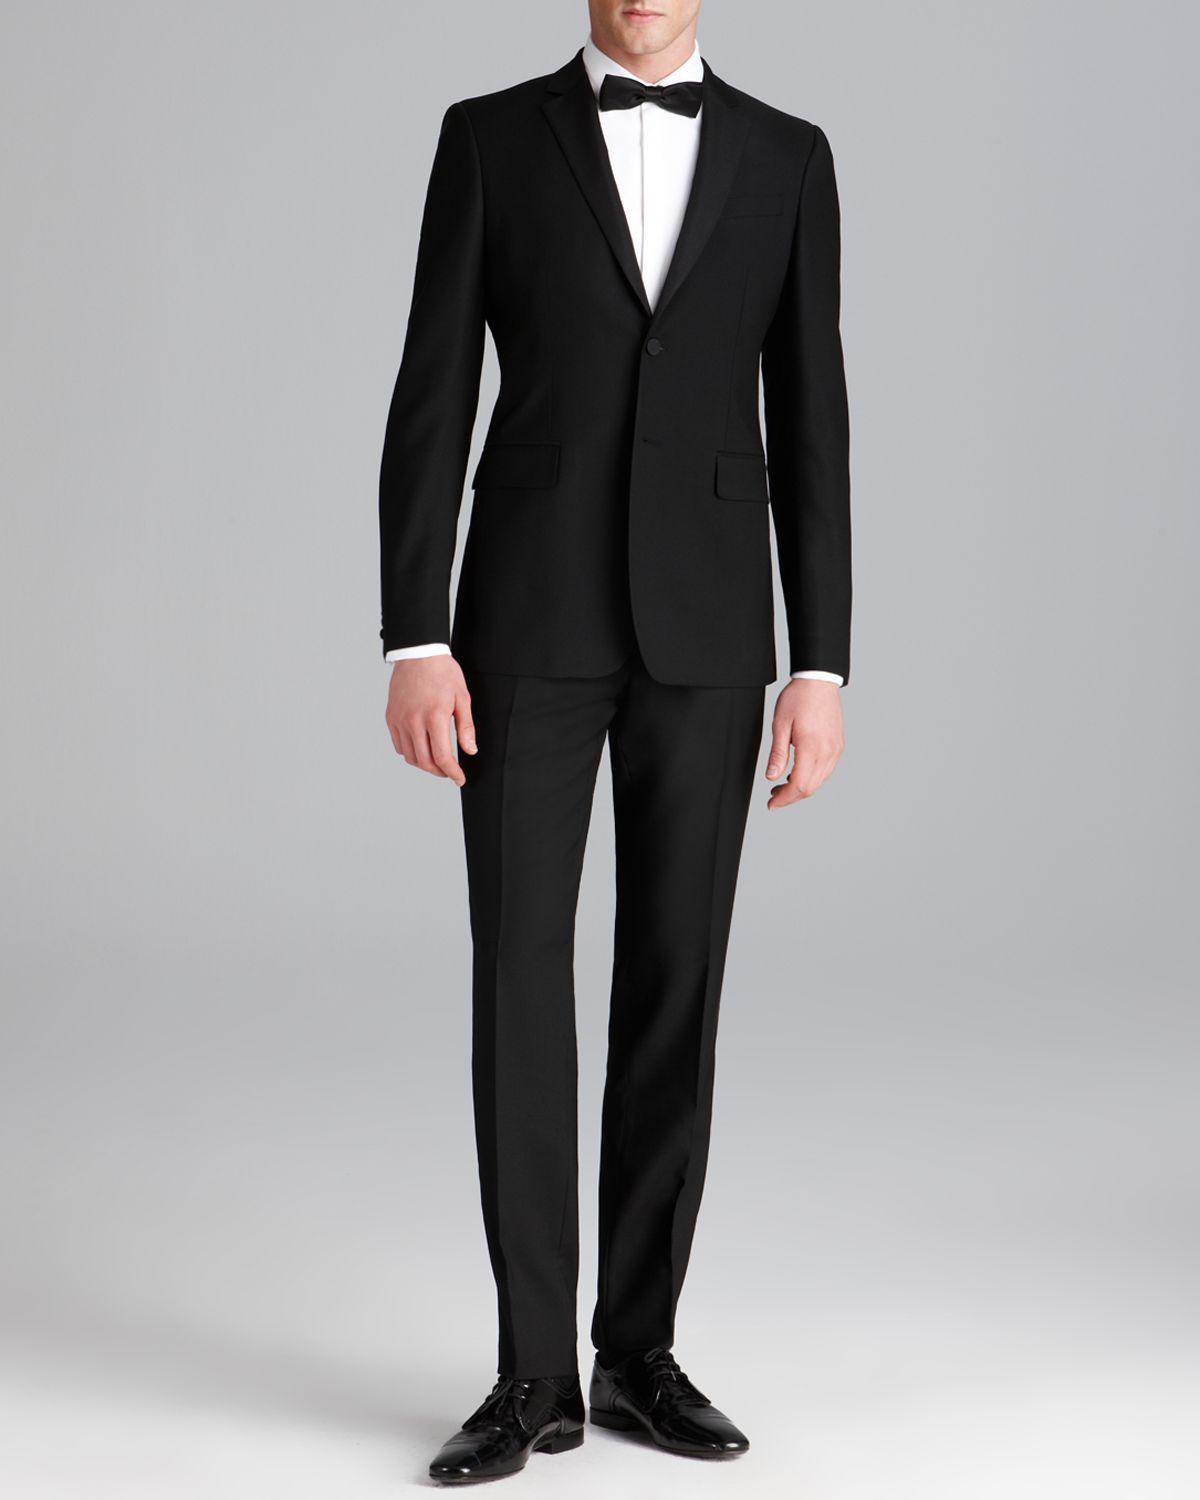 Lyst - Burberry Millbank Tuxedo Suit - Regular Fit in Black for Men